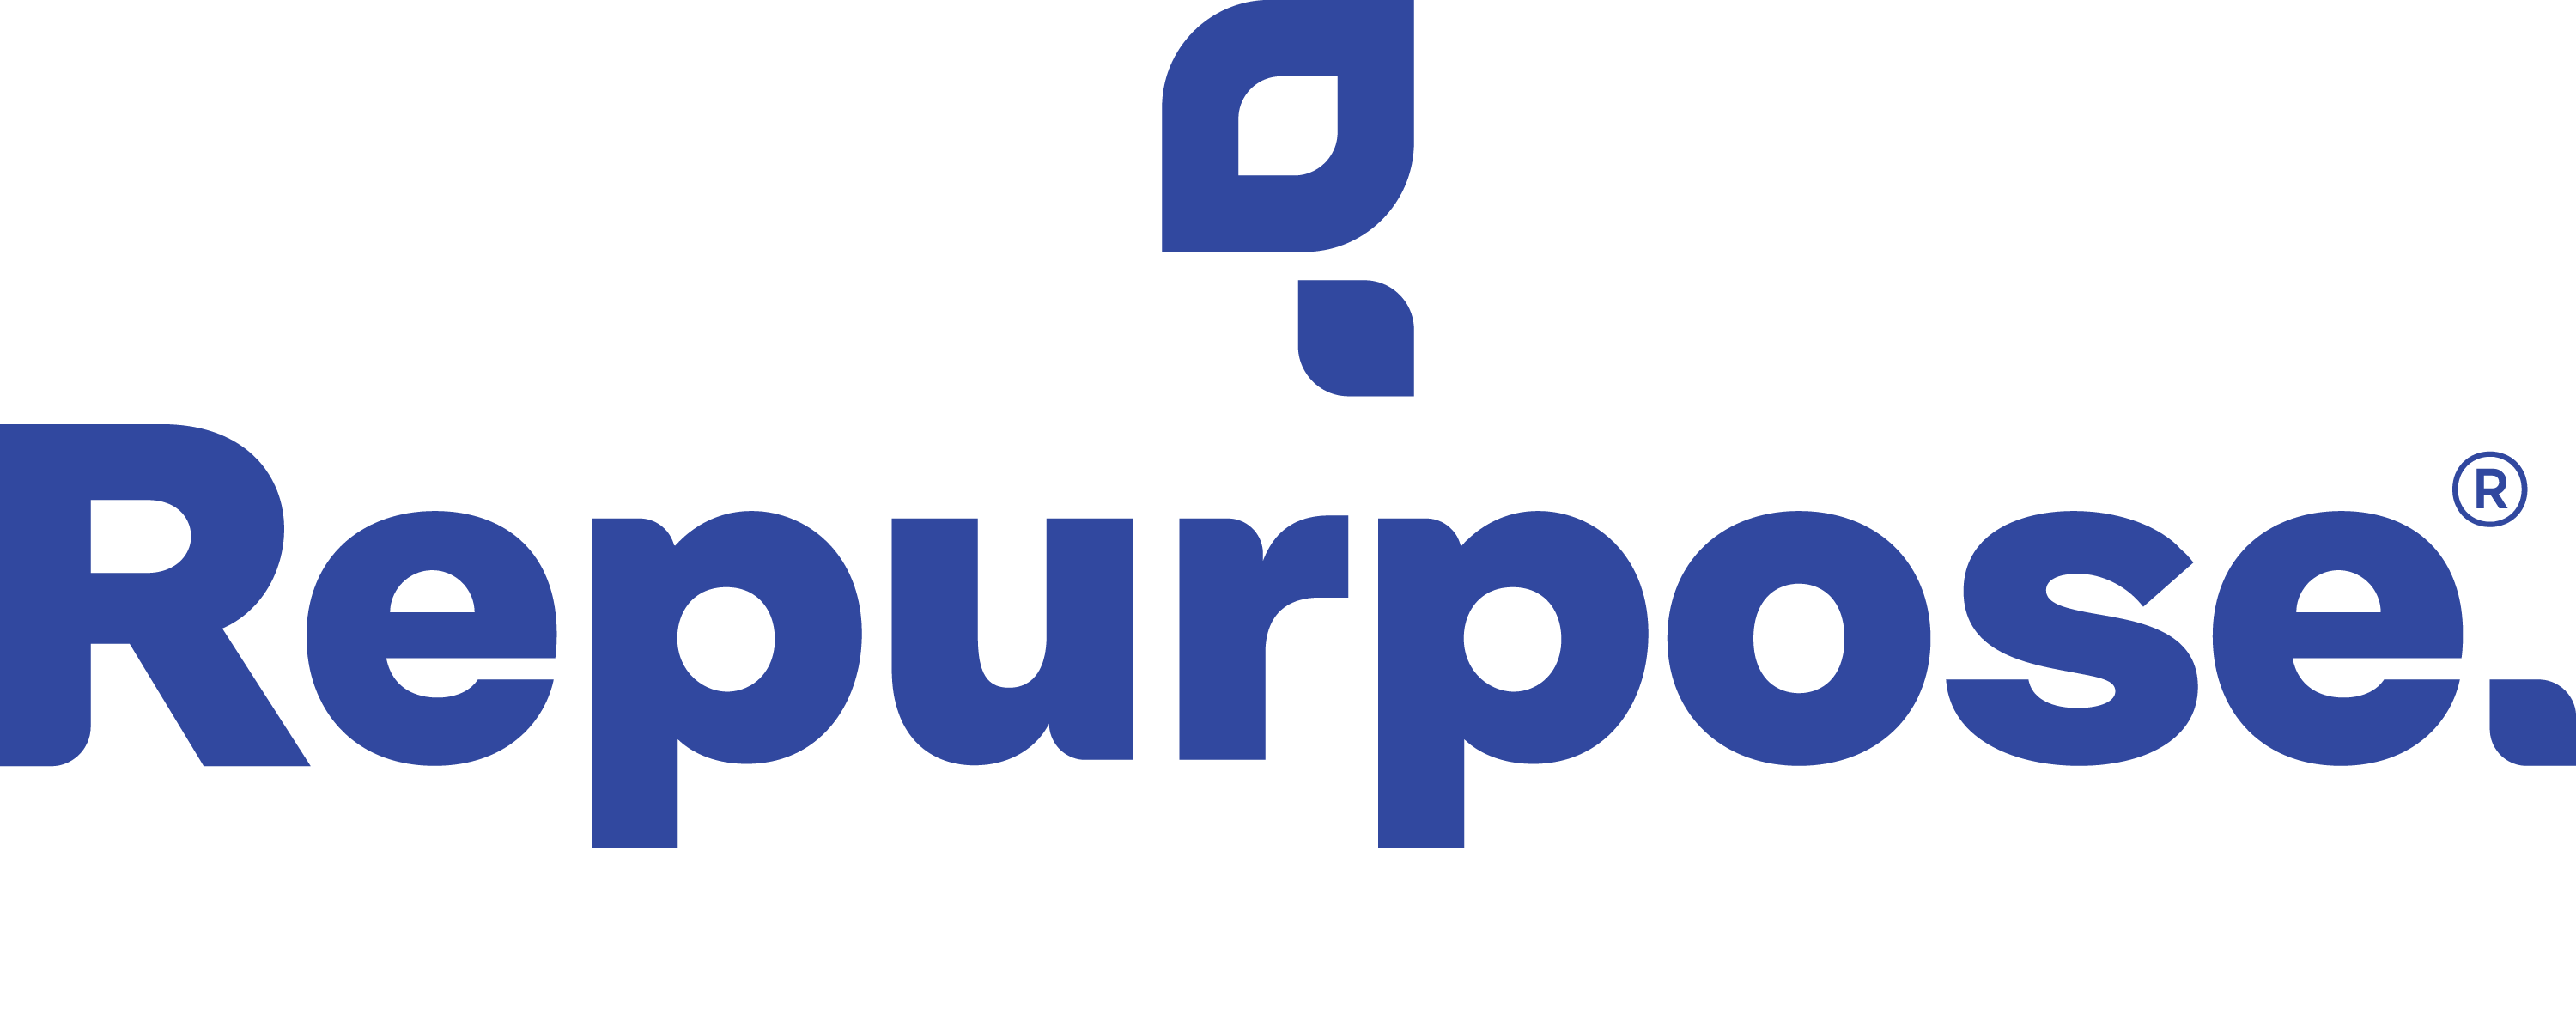 New Repurpose logo